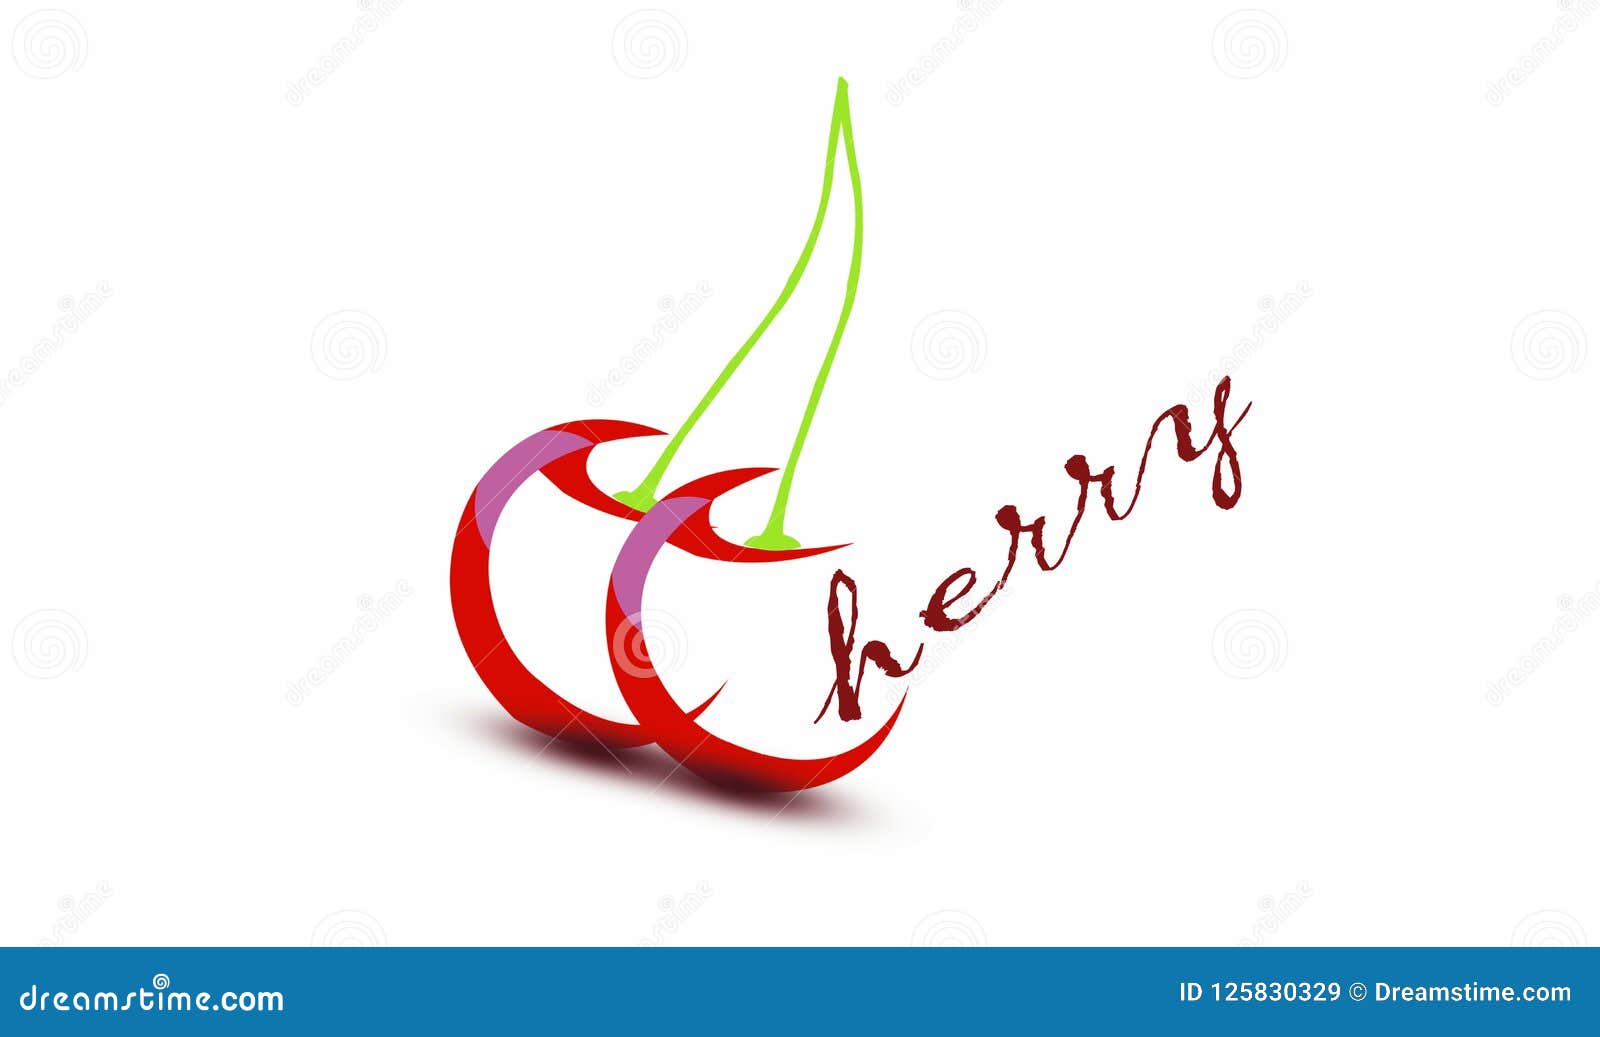 Cherry stock image. Image of white, cherry, painting - 125830329